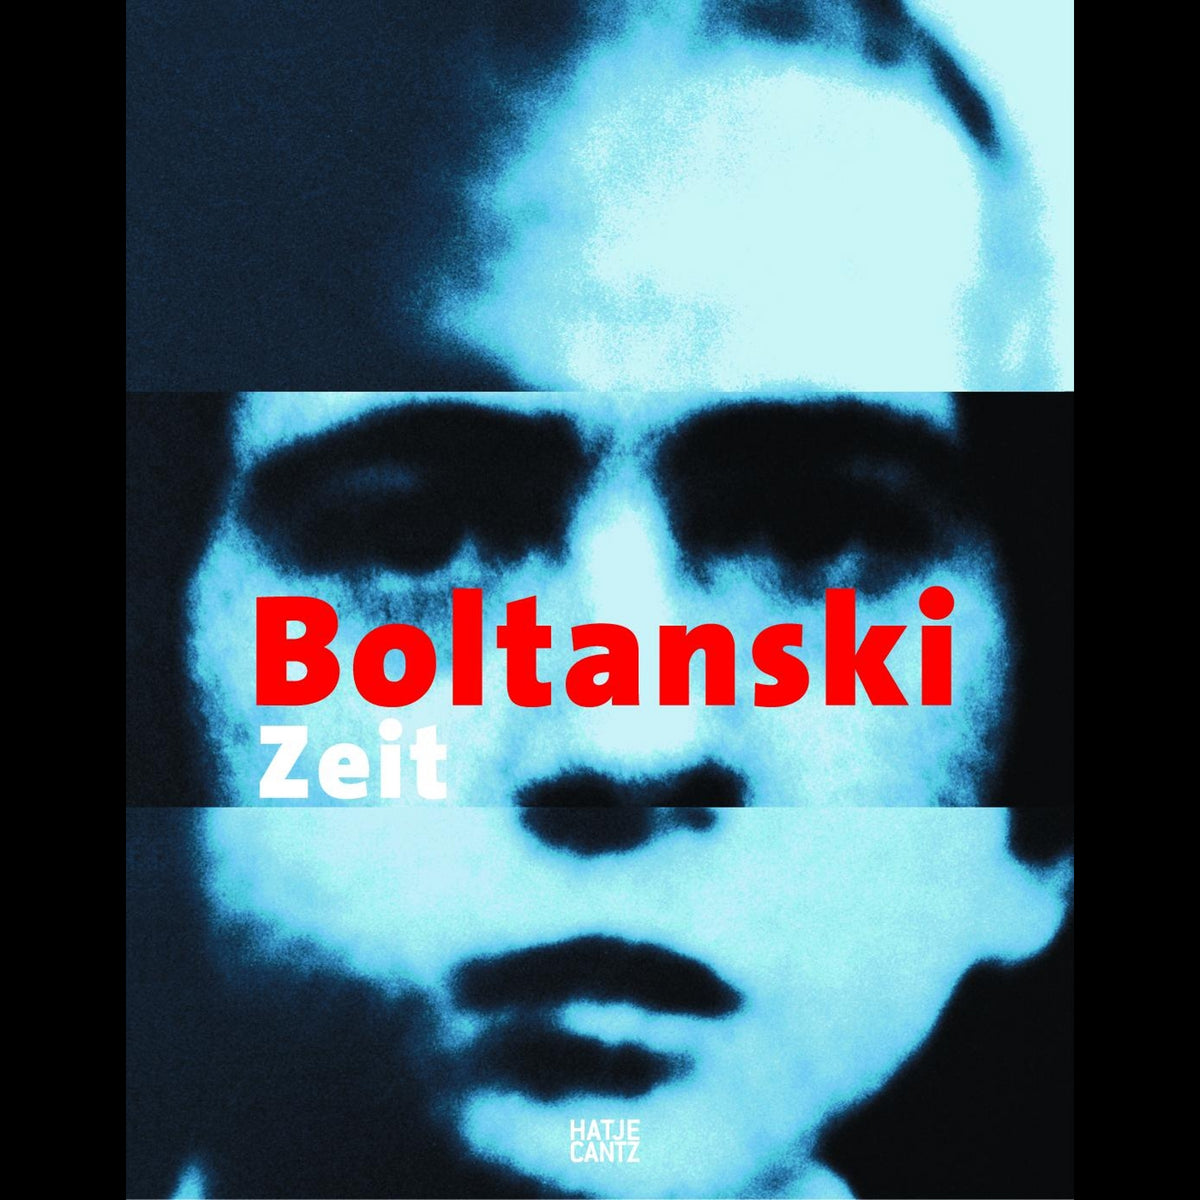 Coverbild Christian Boltanski